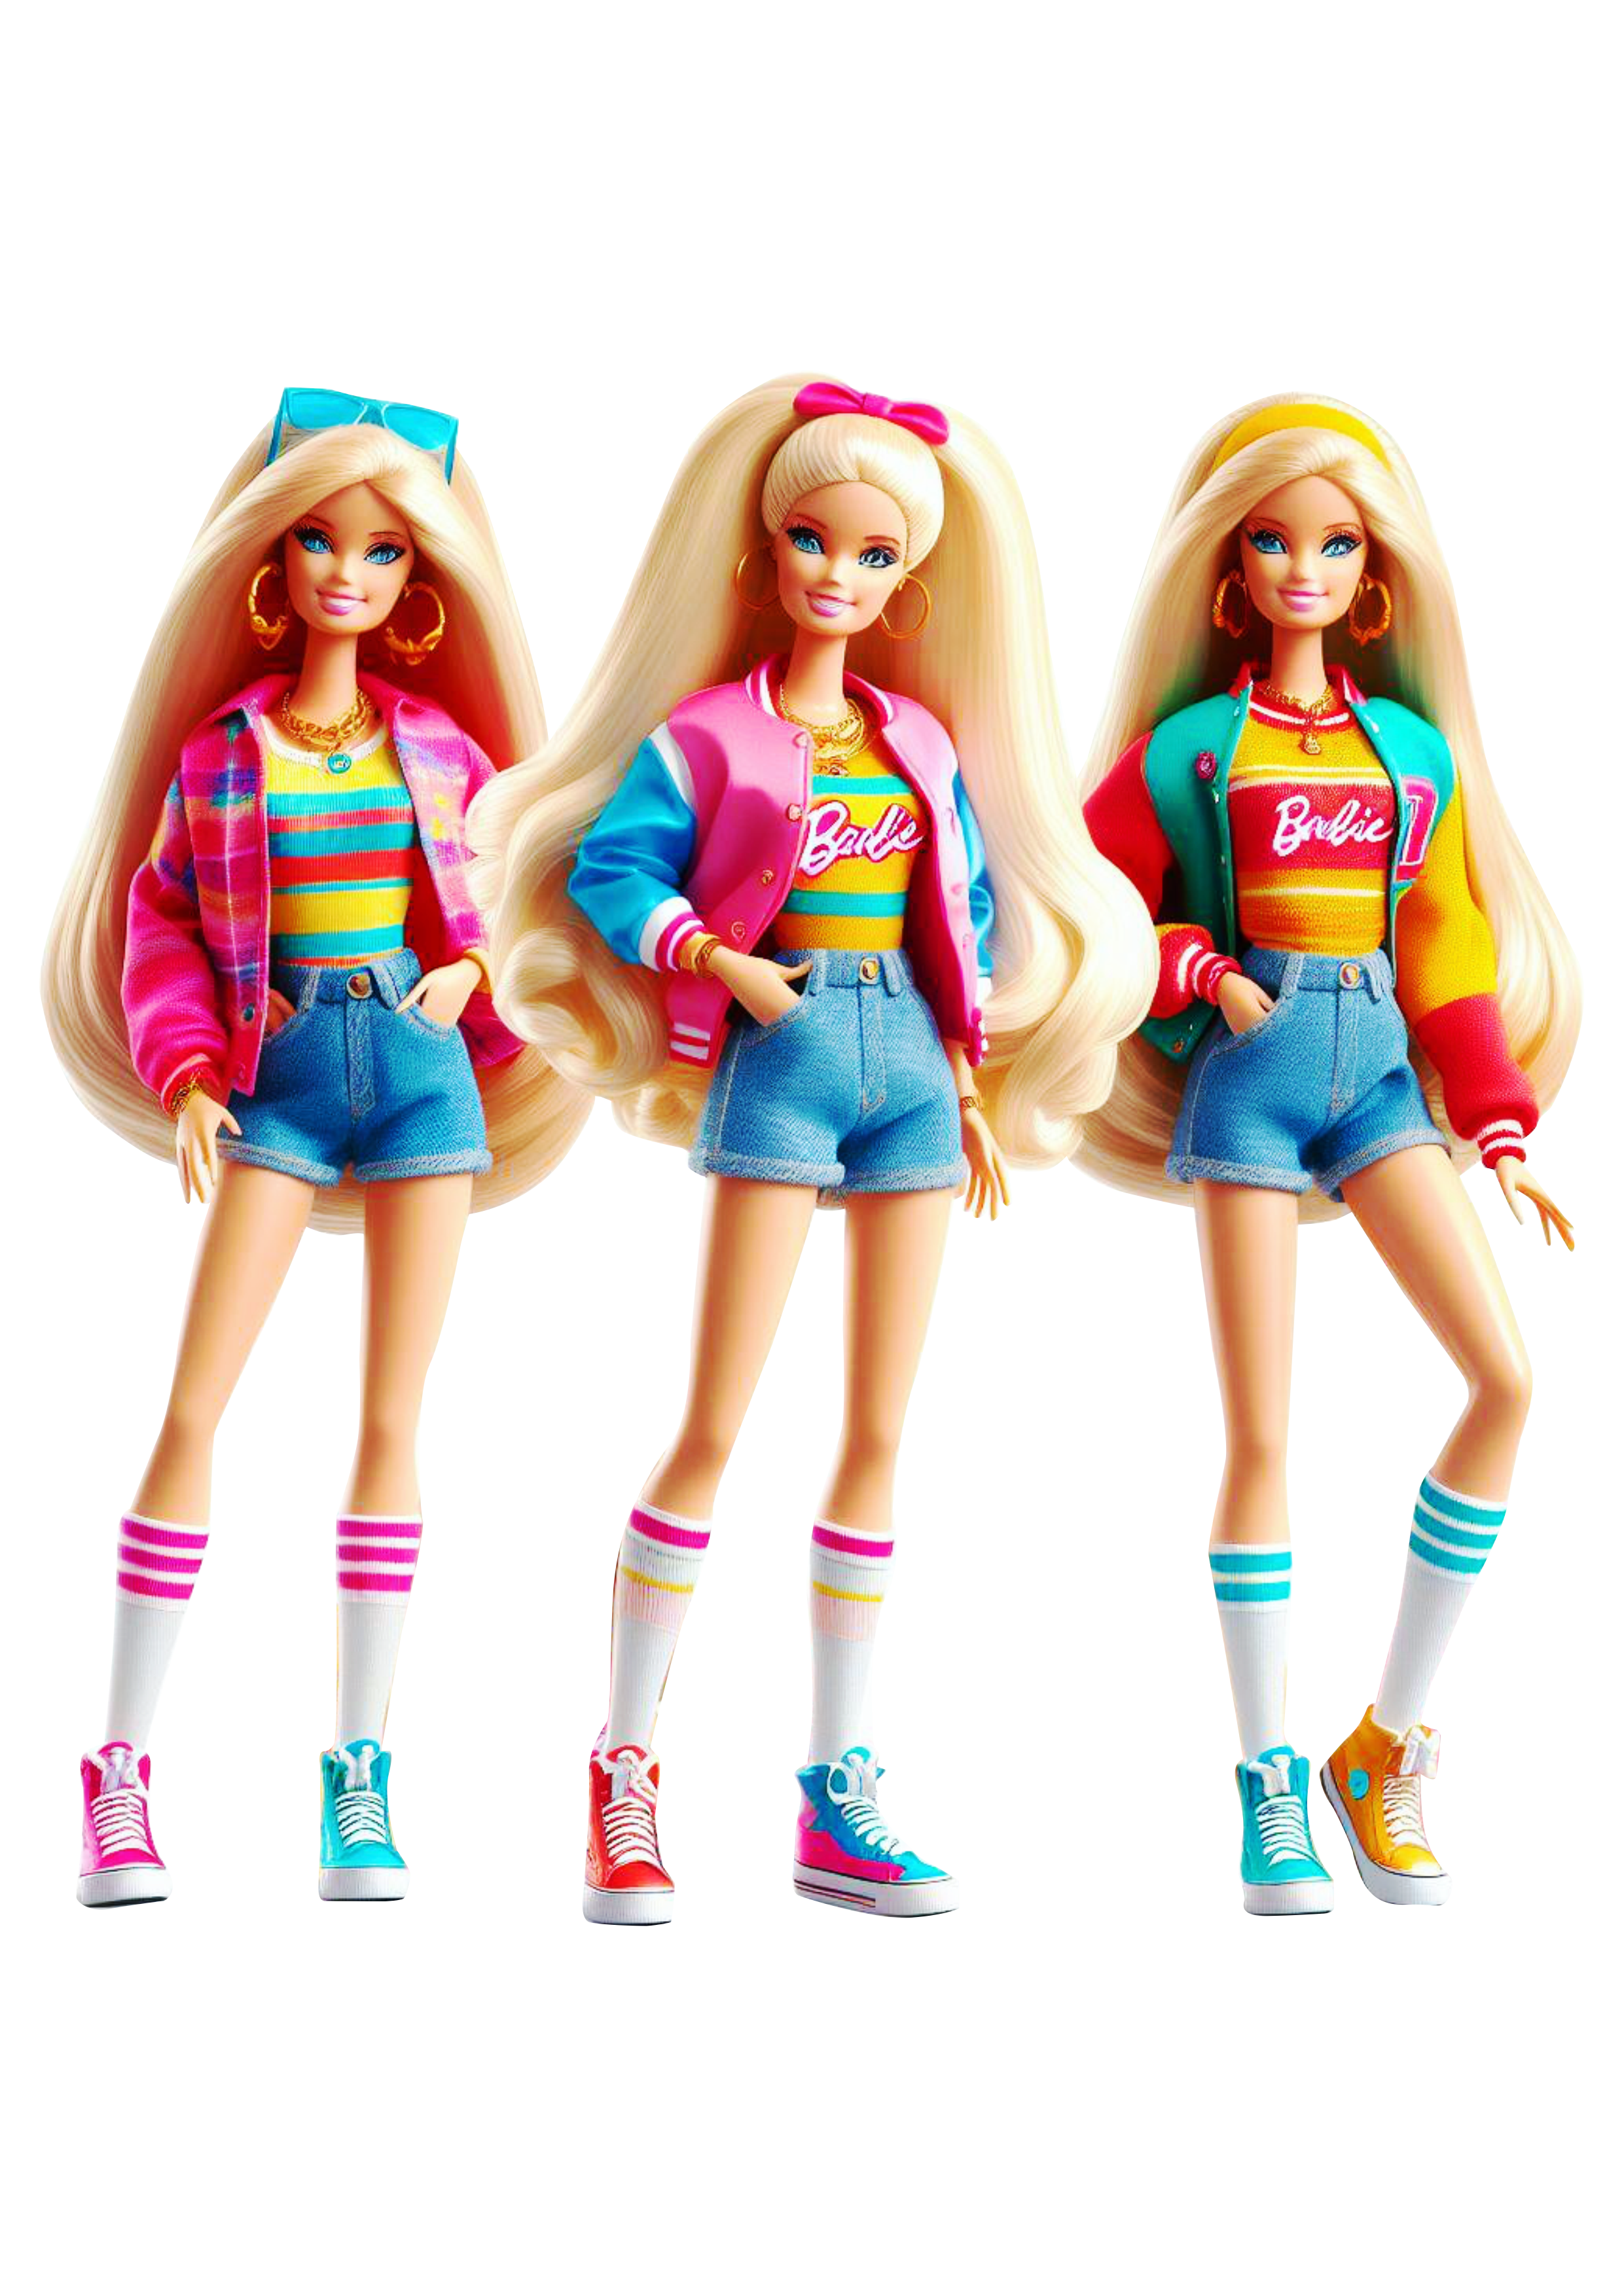 Barbie adolescente boneca png image